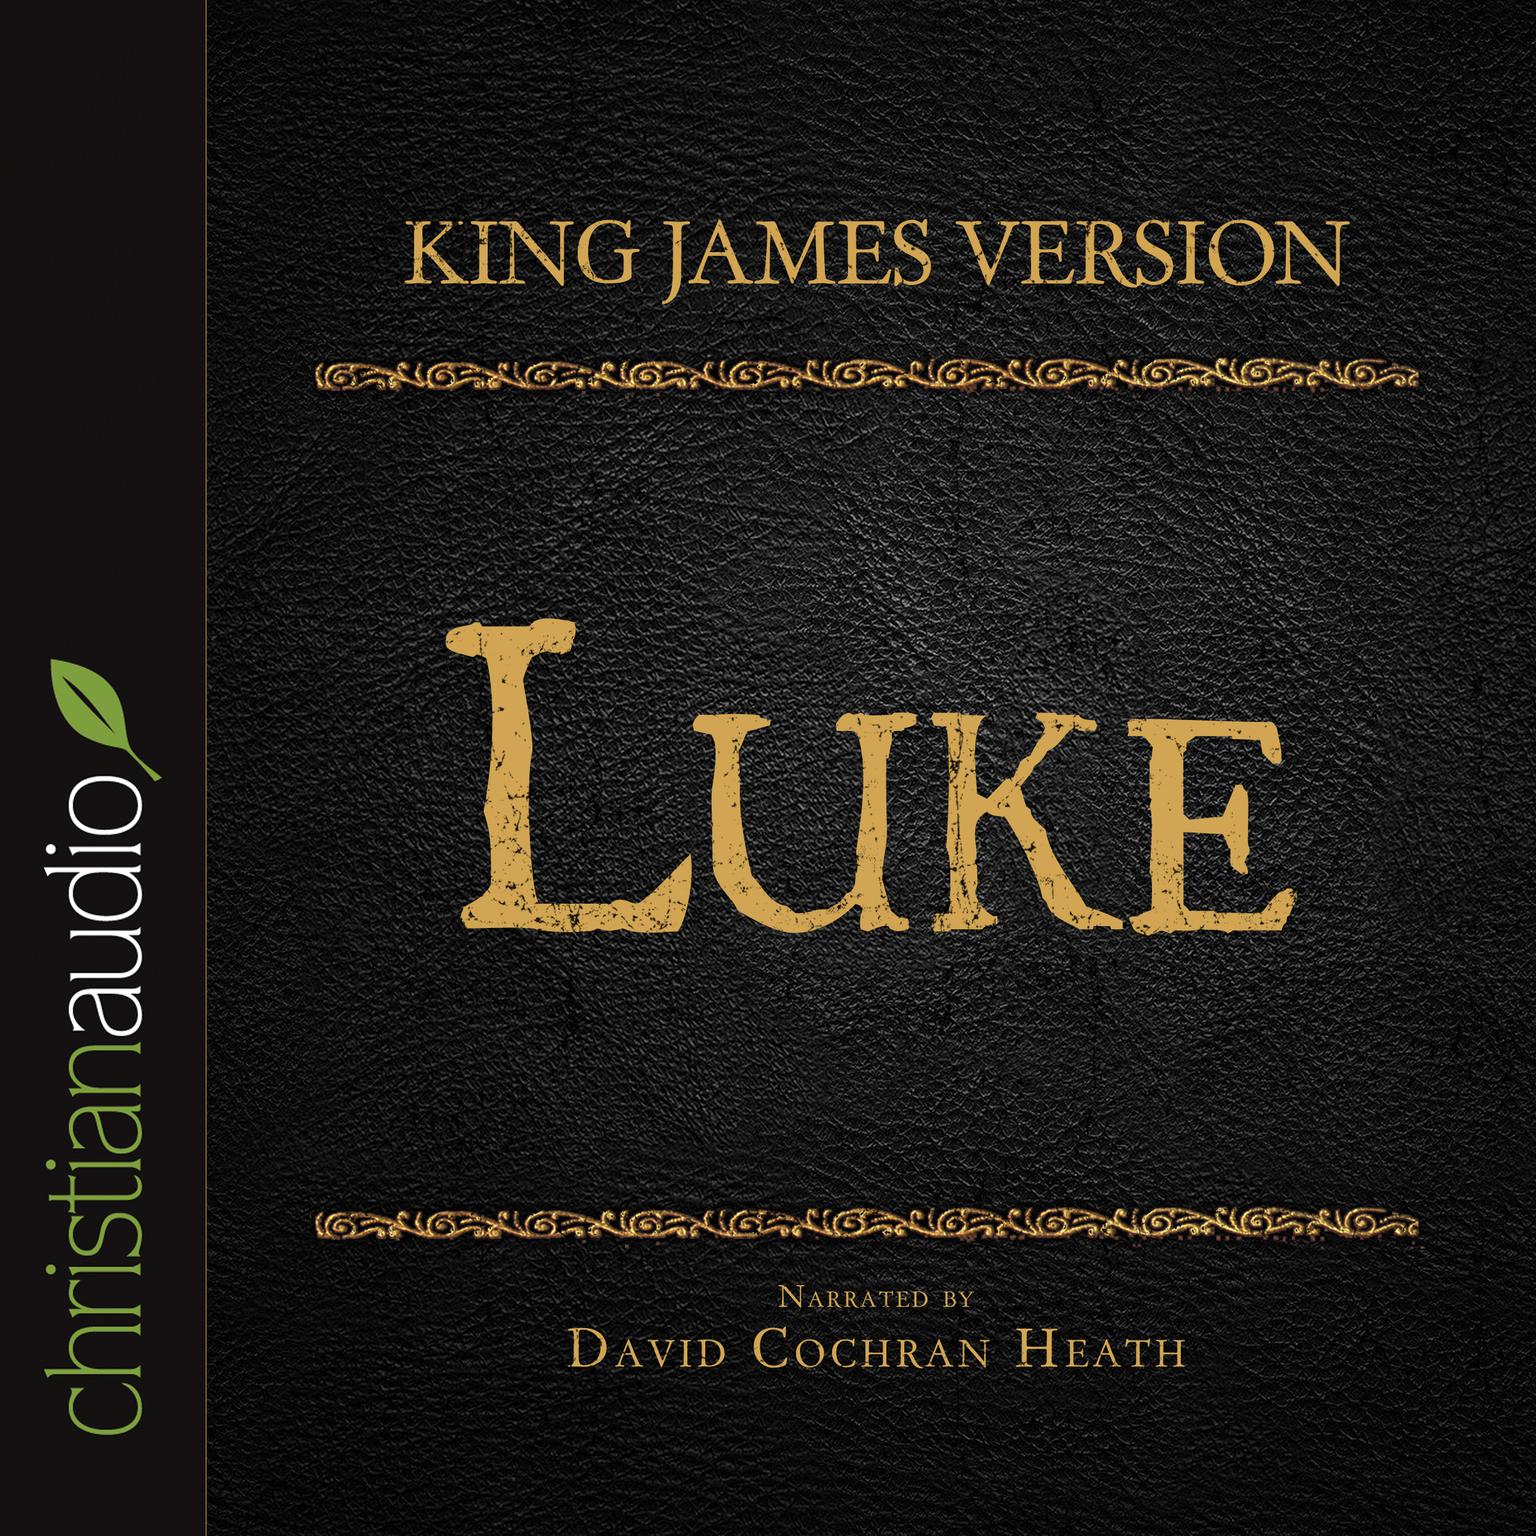 Holy Bible in Audio - King James Version: Luke Audiobook, by David Cochran Heath